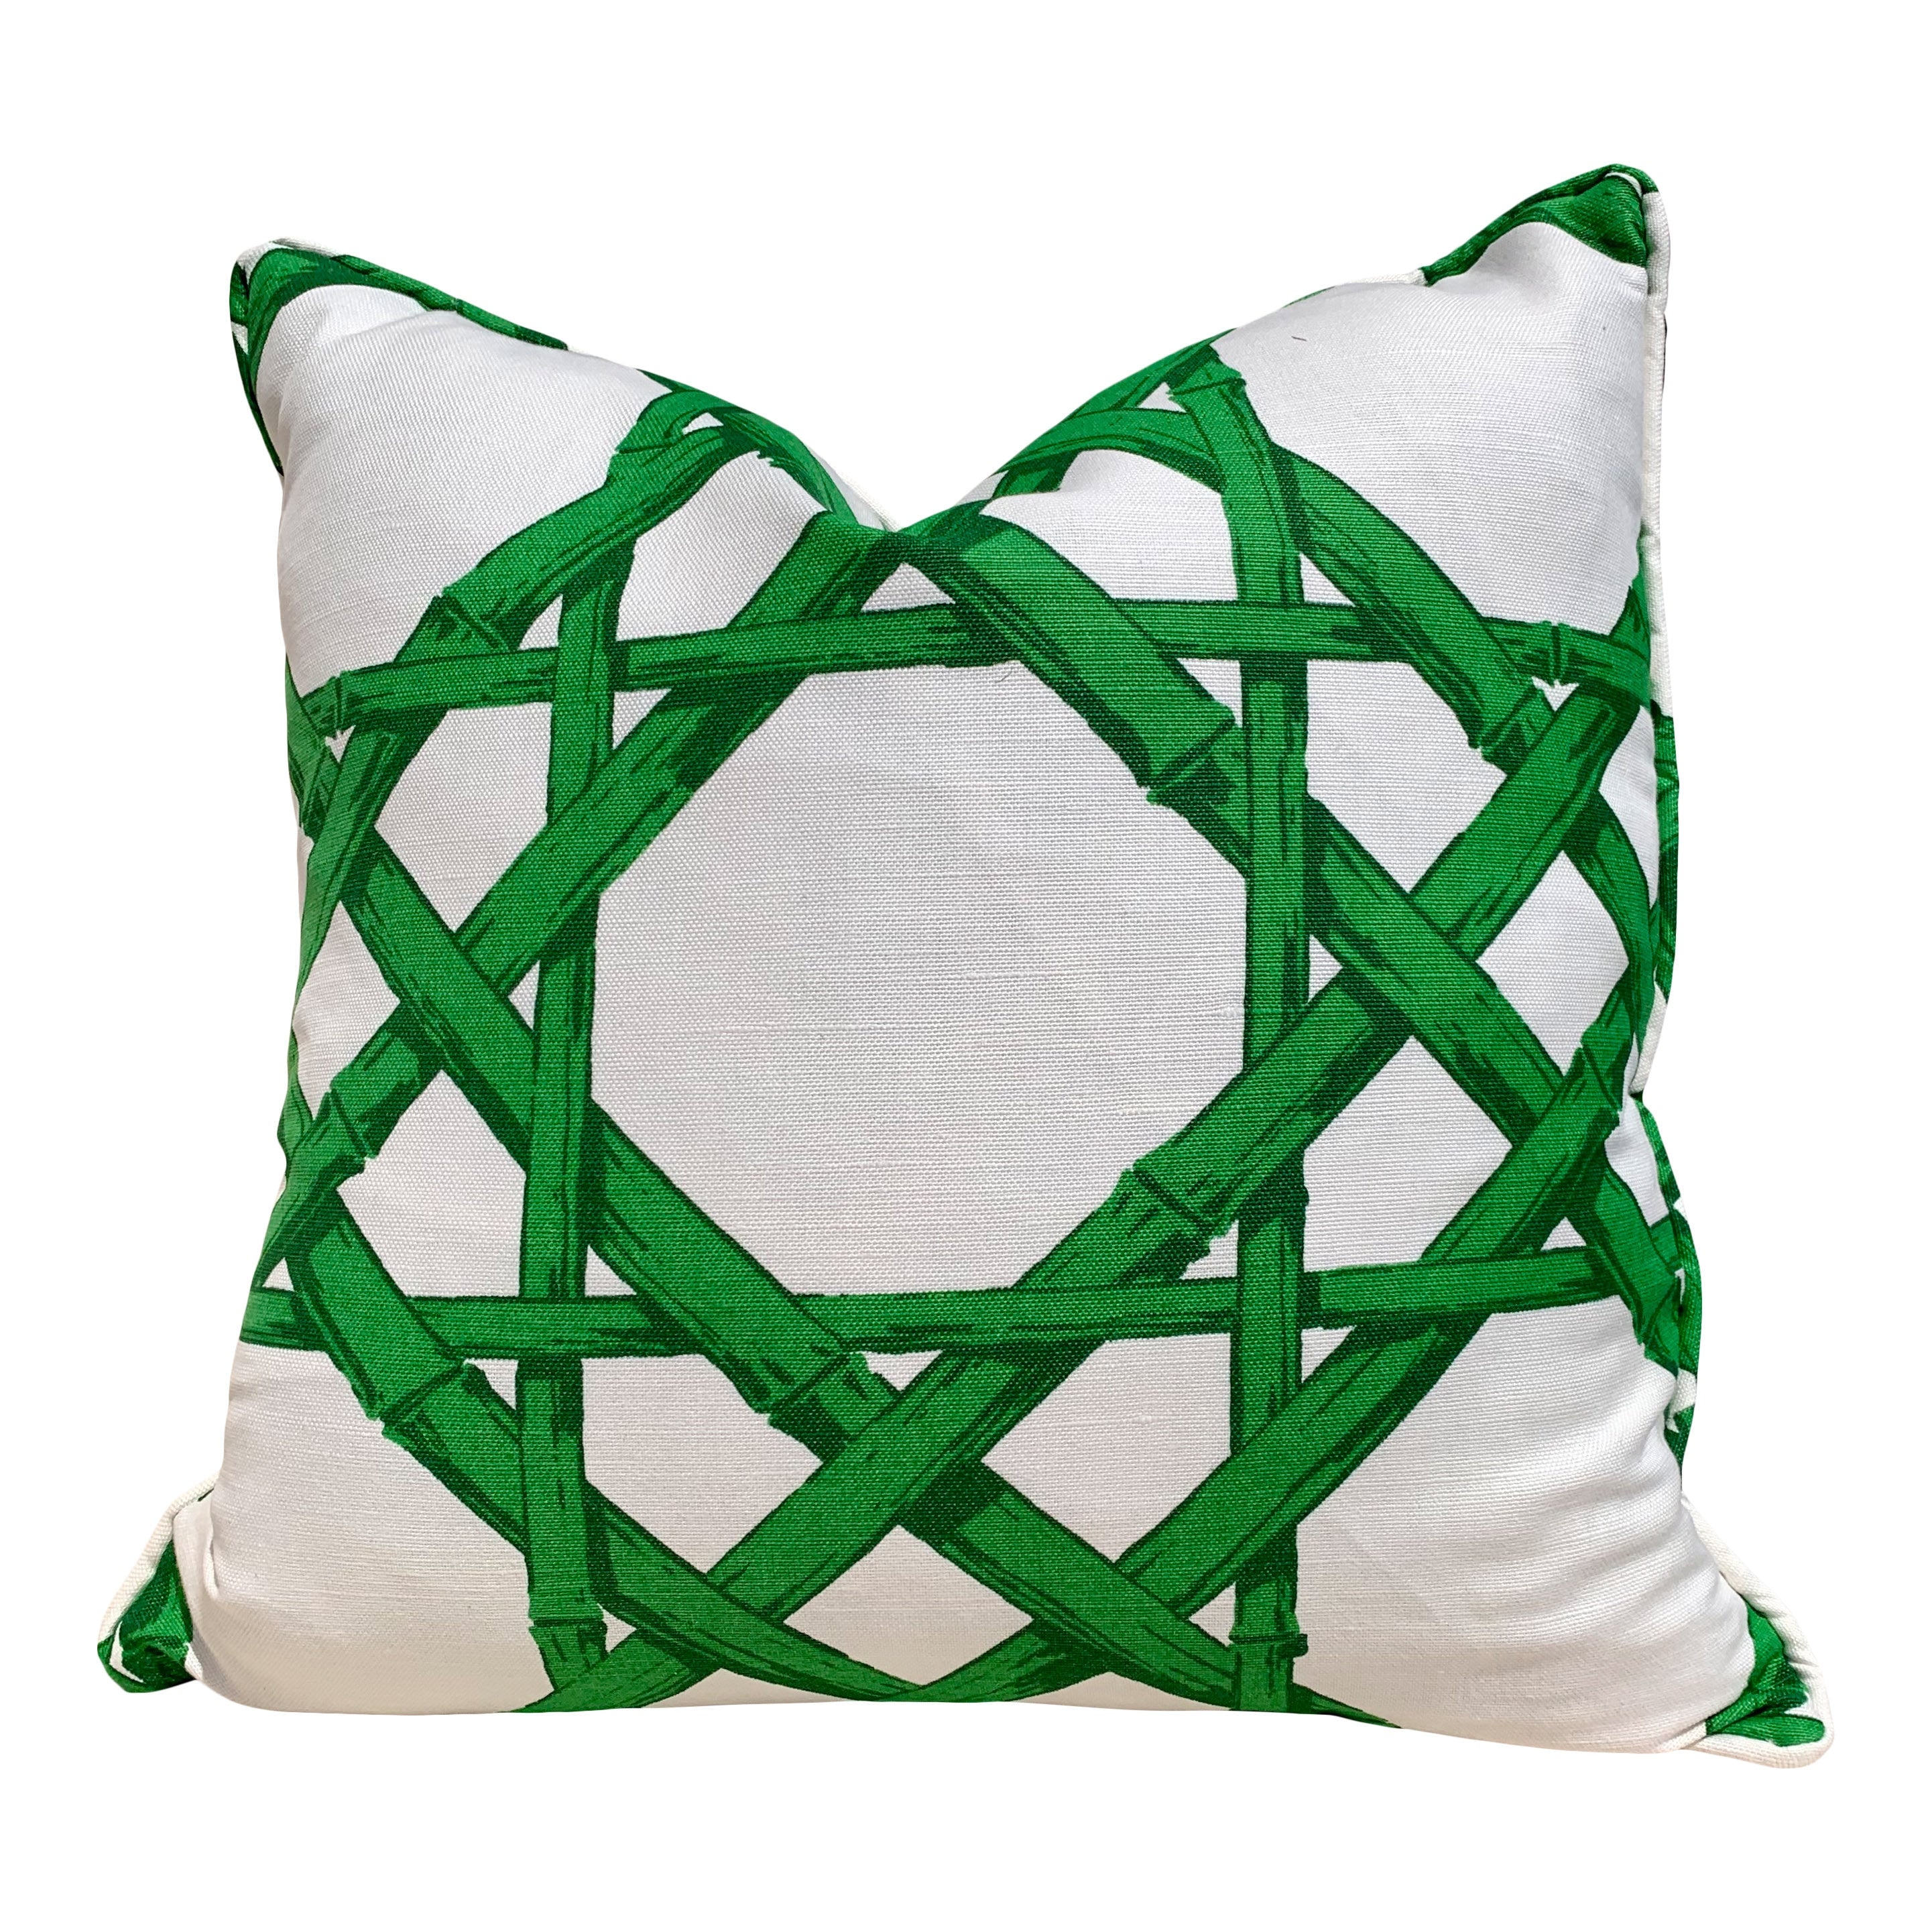 Kelly Green Thibaut Cyrus Cane Pillow Cover, Accent Pillow Throw, Decorative Cushion Cover, Lumbar Pillow, Designer Pillow